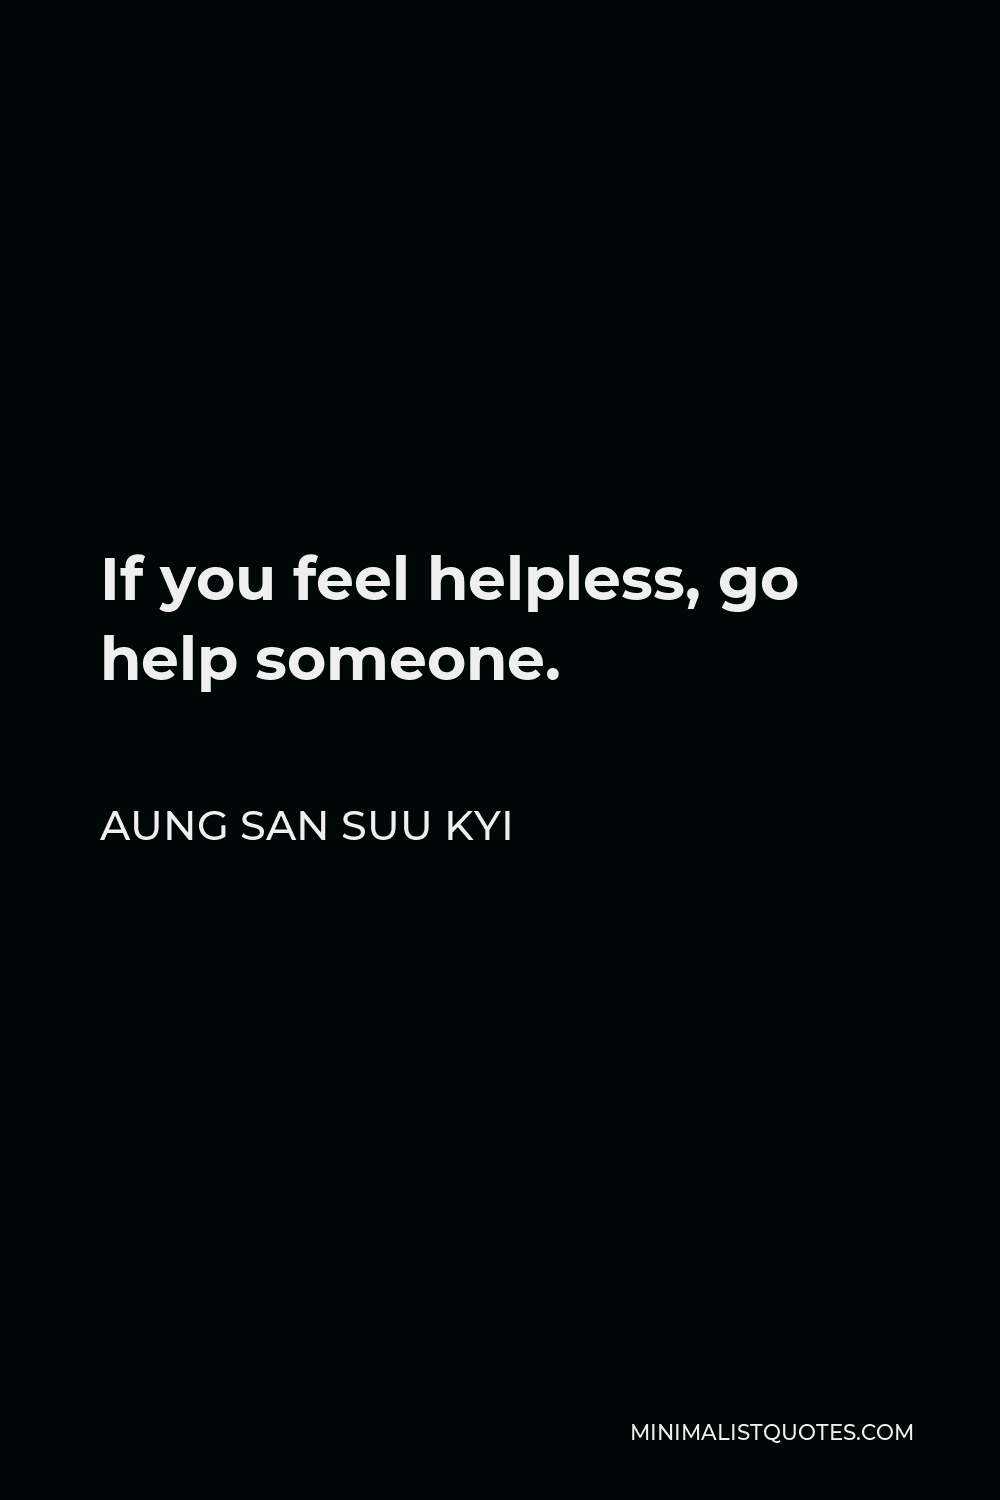 Aung San Suu Kyi Quote - If you feel helpless, go help someone.